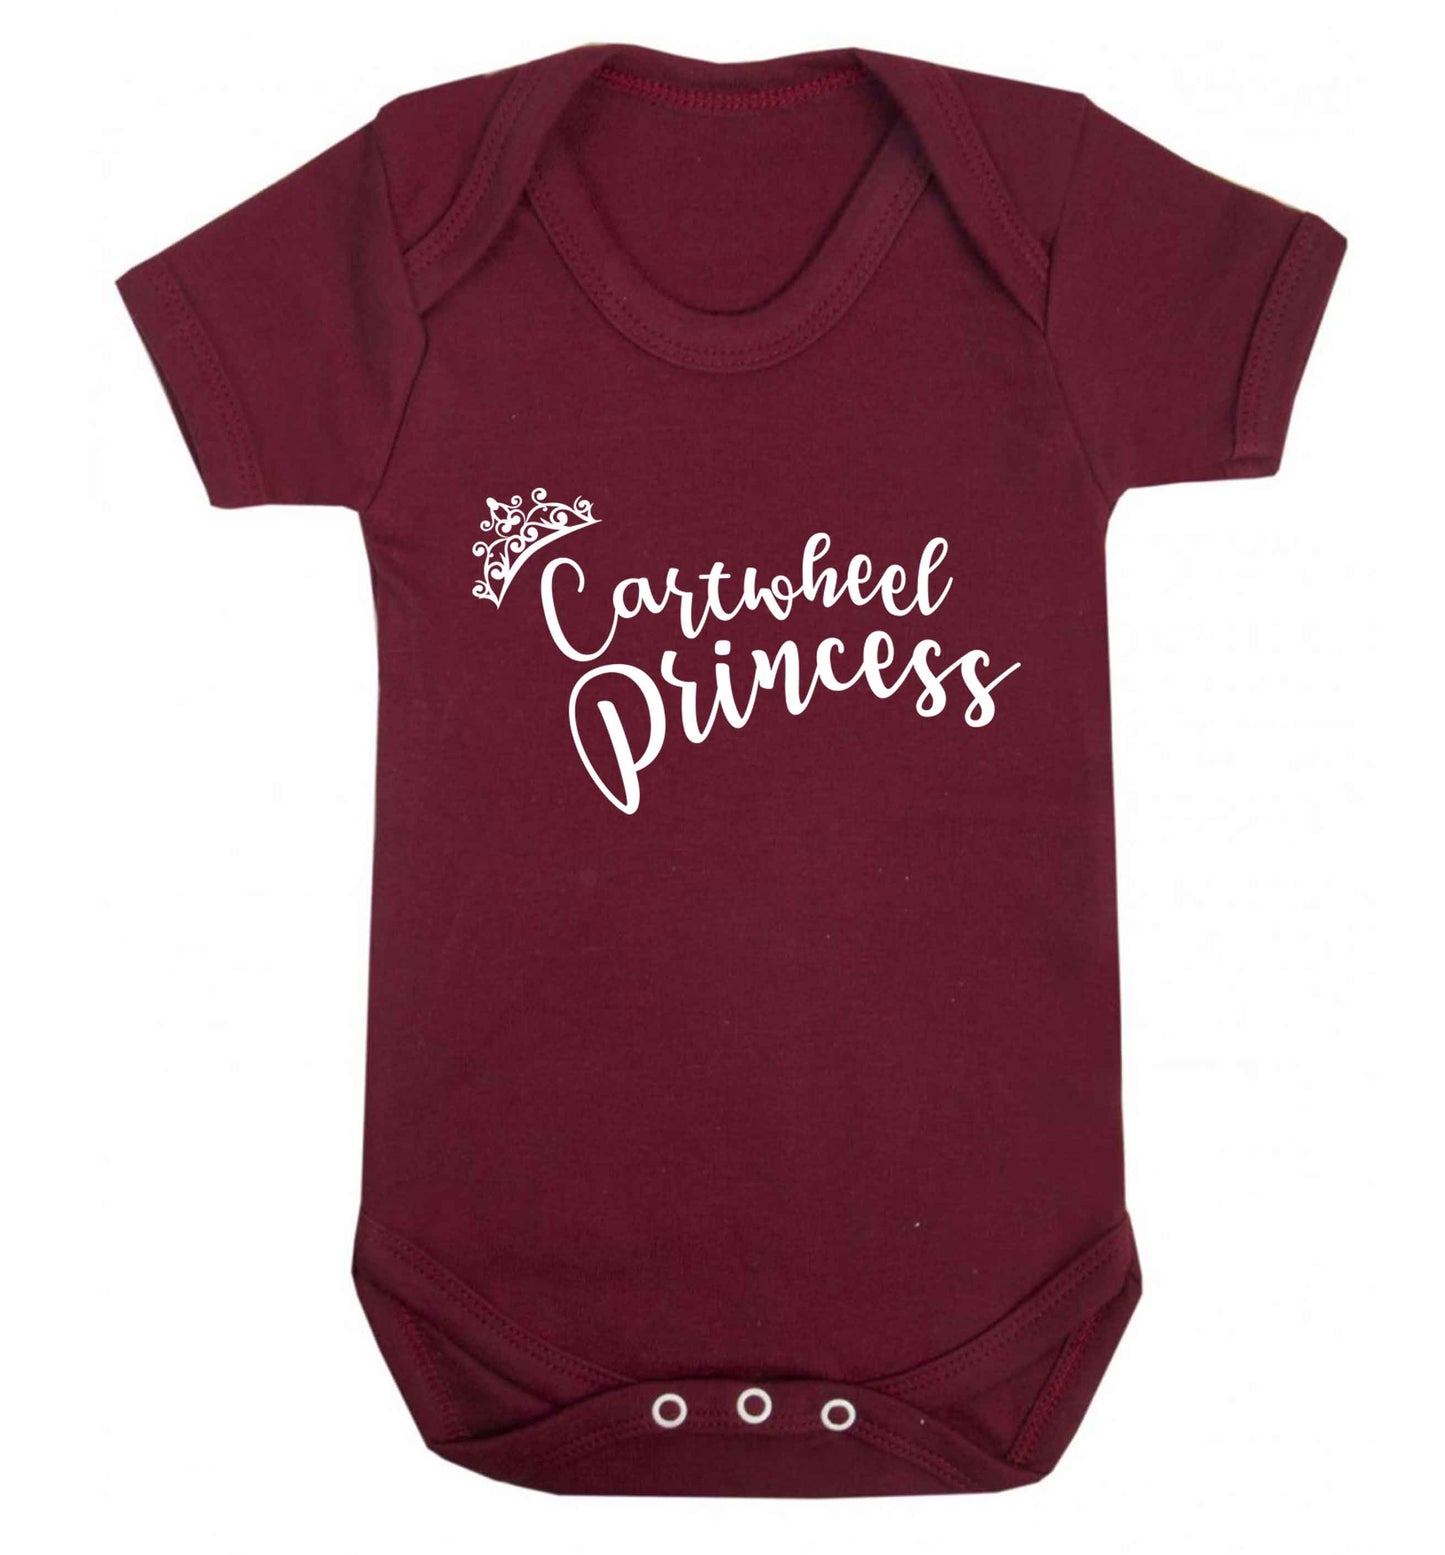 Cartwheel princess Baby Vest maroon 18-24 months